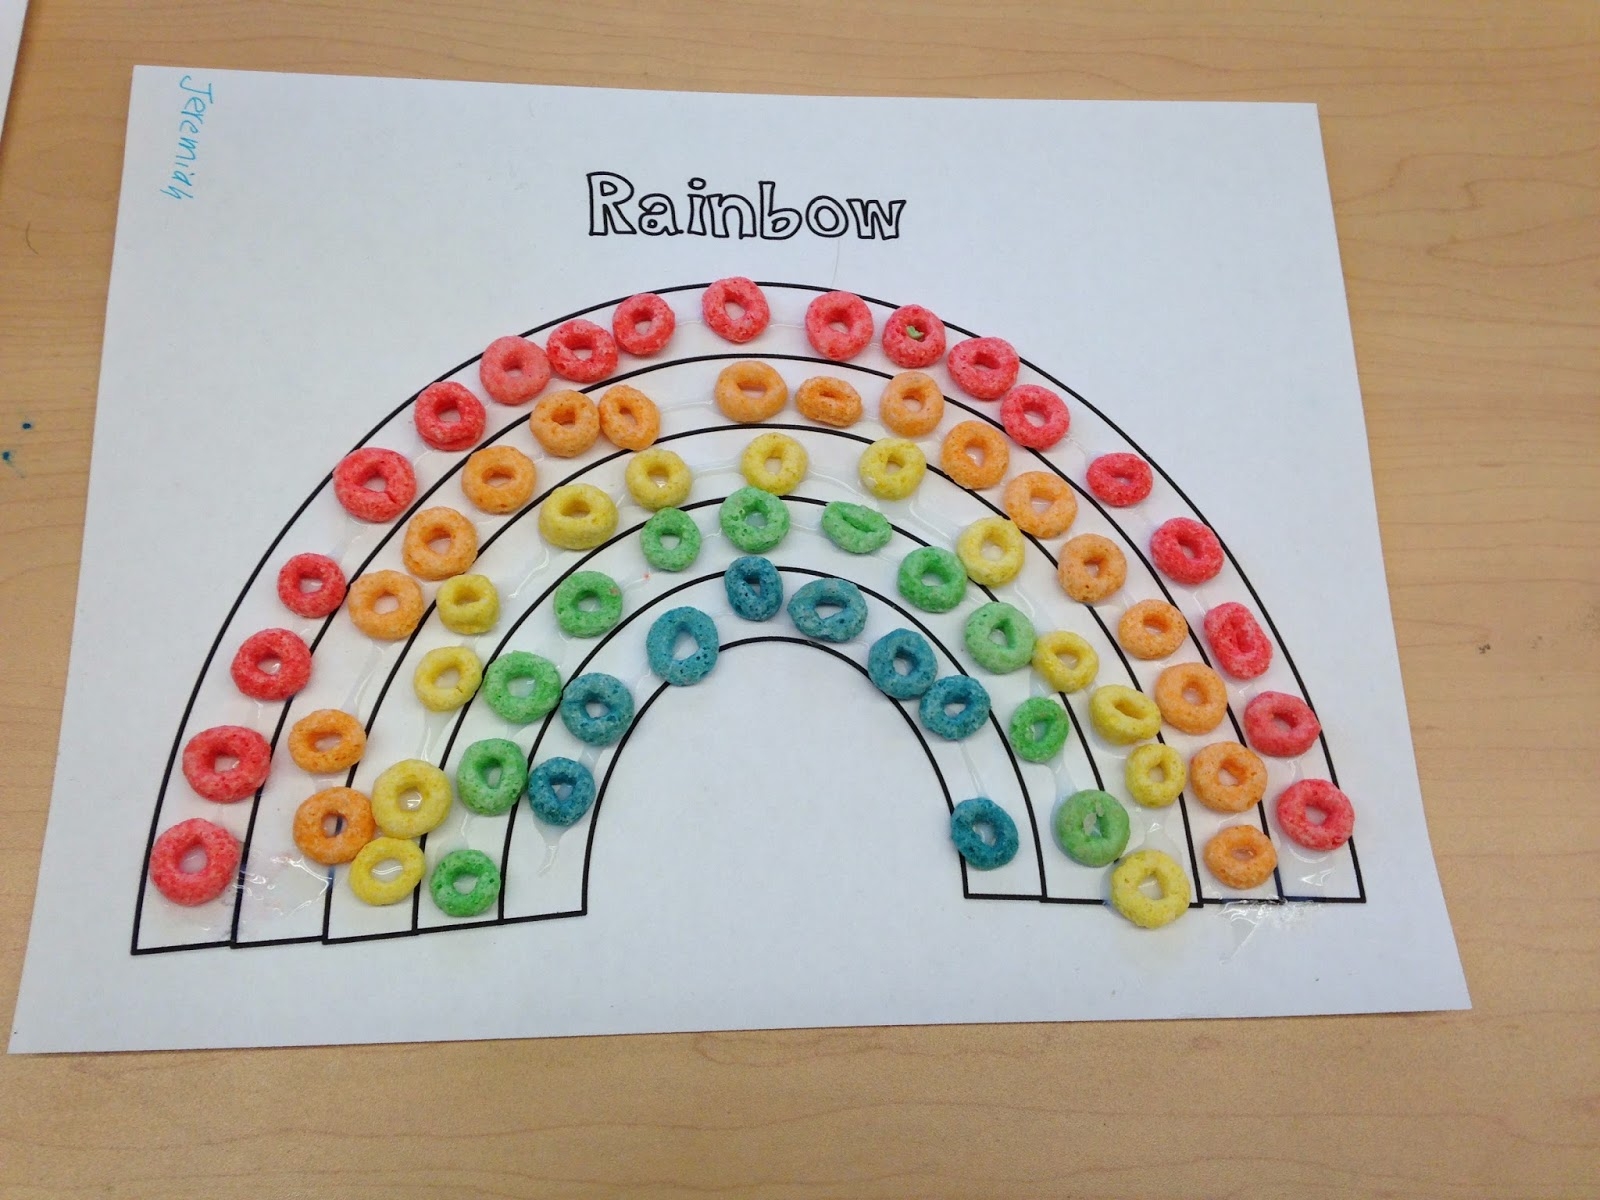 Autism Tank Rainbow Craftivity With Fruit Loops